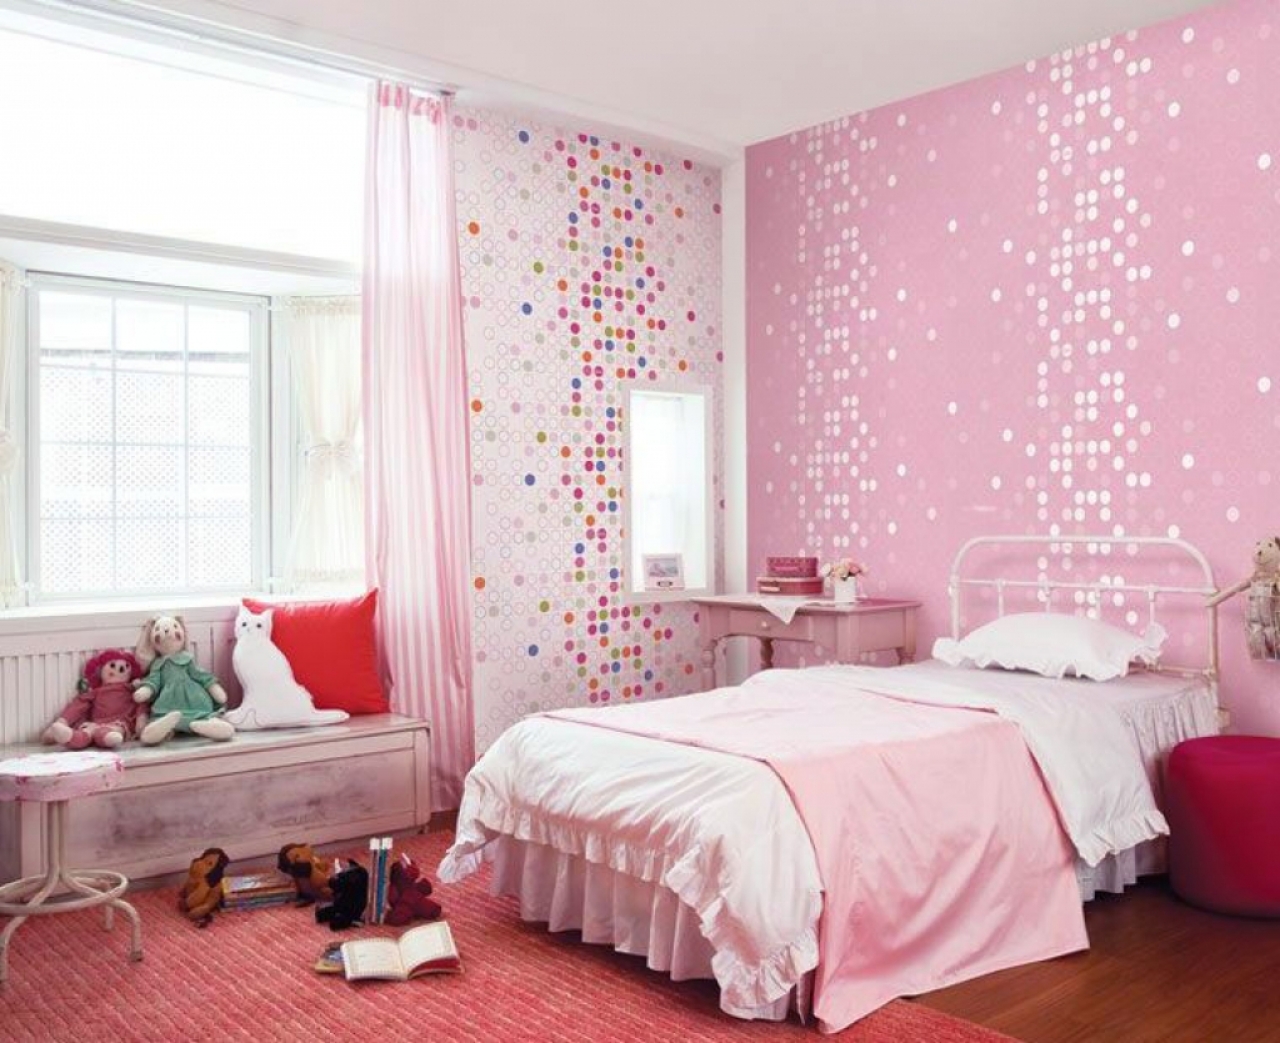 Kids room cute pink dotty wallpaper girls bedroom home designjpg 1280x1043